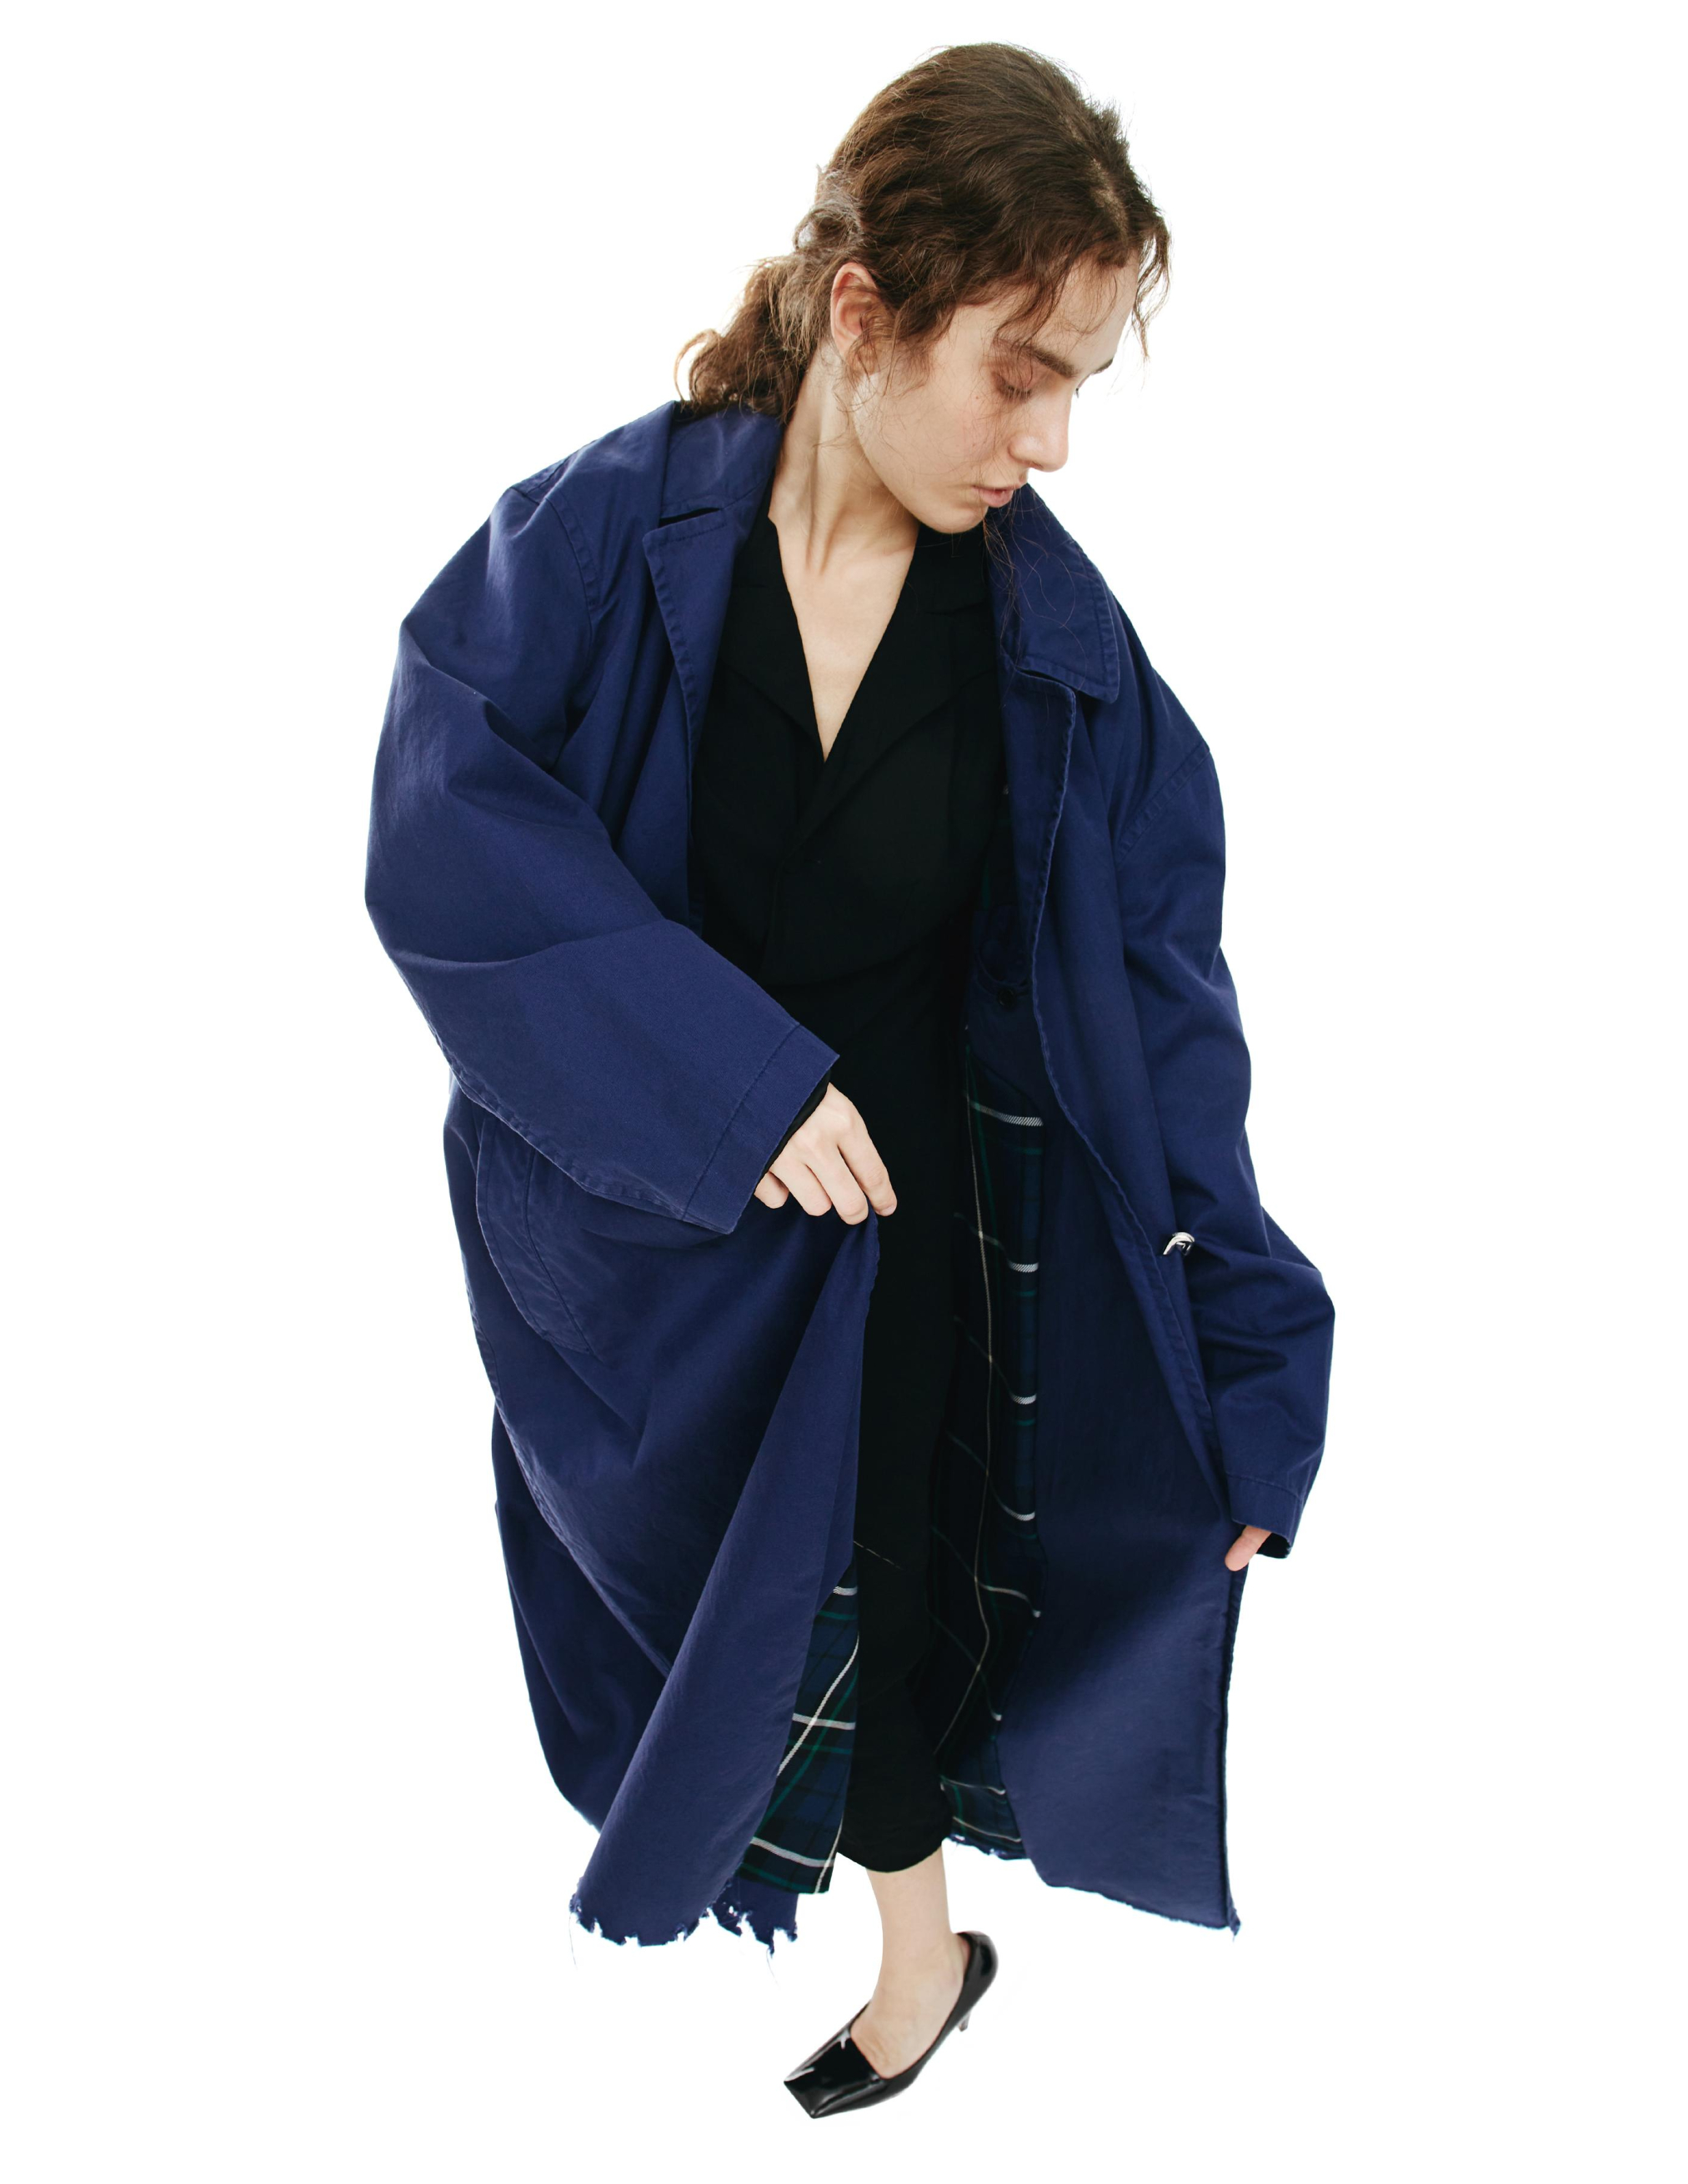 Оверсайз пальто с клетчатым подкладом Balenciaga 681165/TKP06/4140, размер 3 681165/TKP06/4140 - фото 7